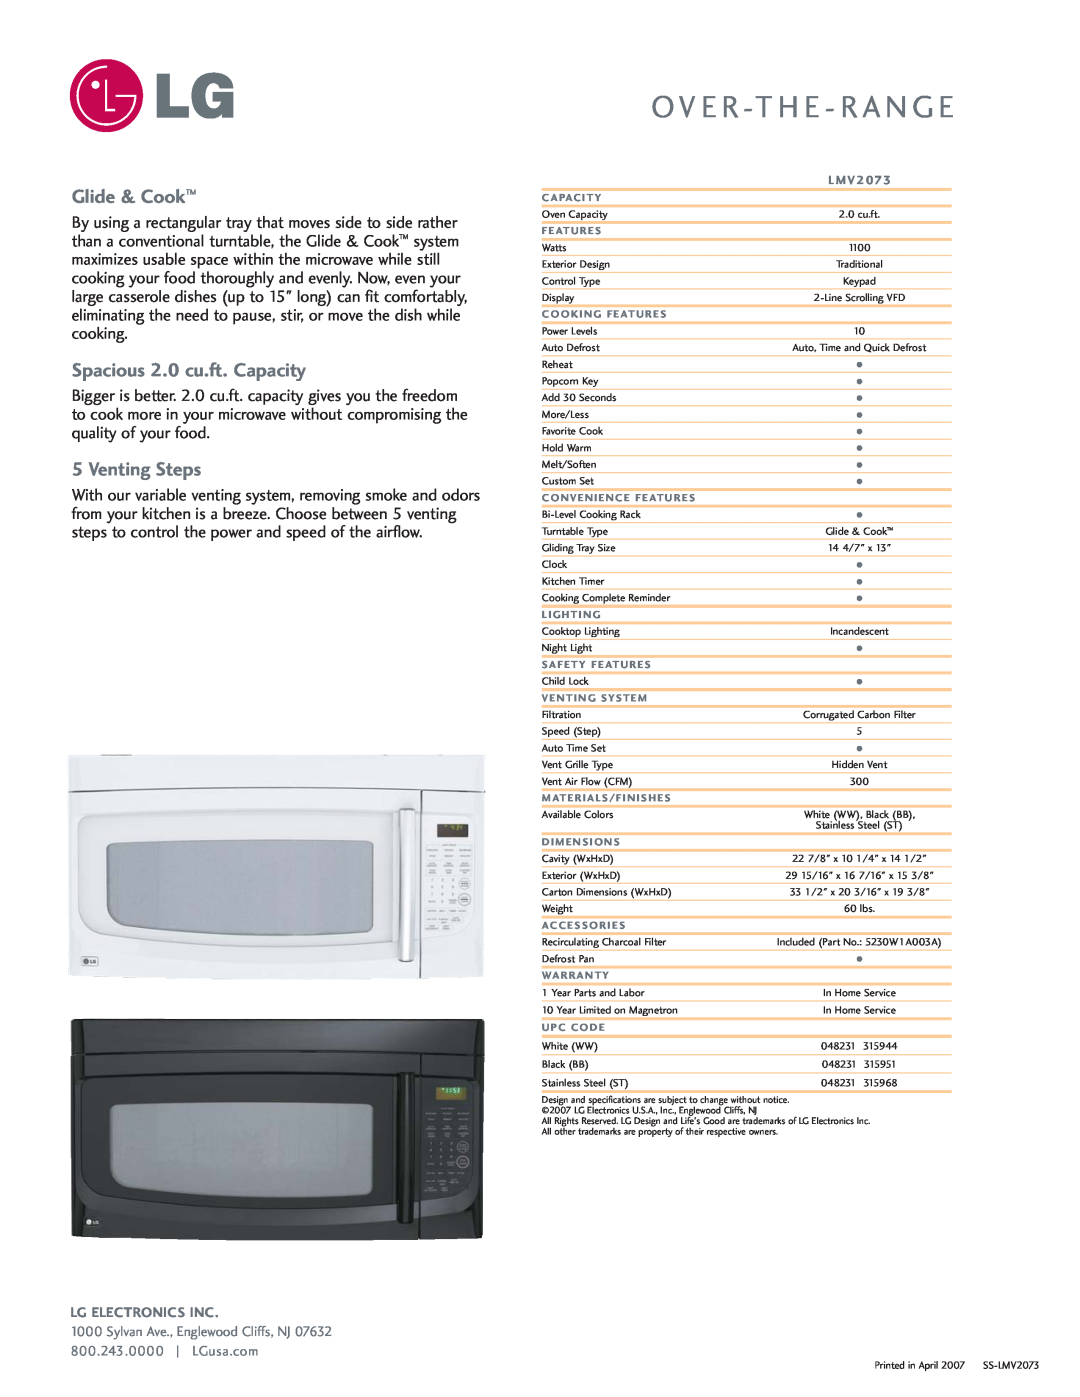 LG Electronics LMV2073 manual Glide & Cook, Spacious 2.0 cu.ft. Capacity, Venting Steps, O V E R -Th E - R A N G E 